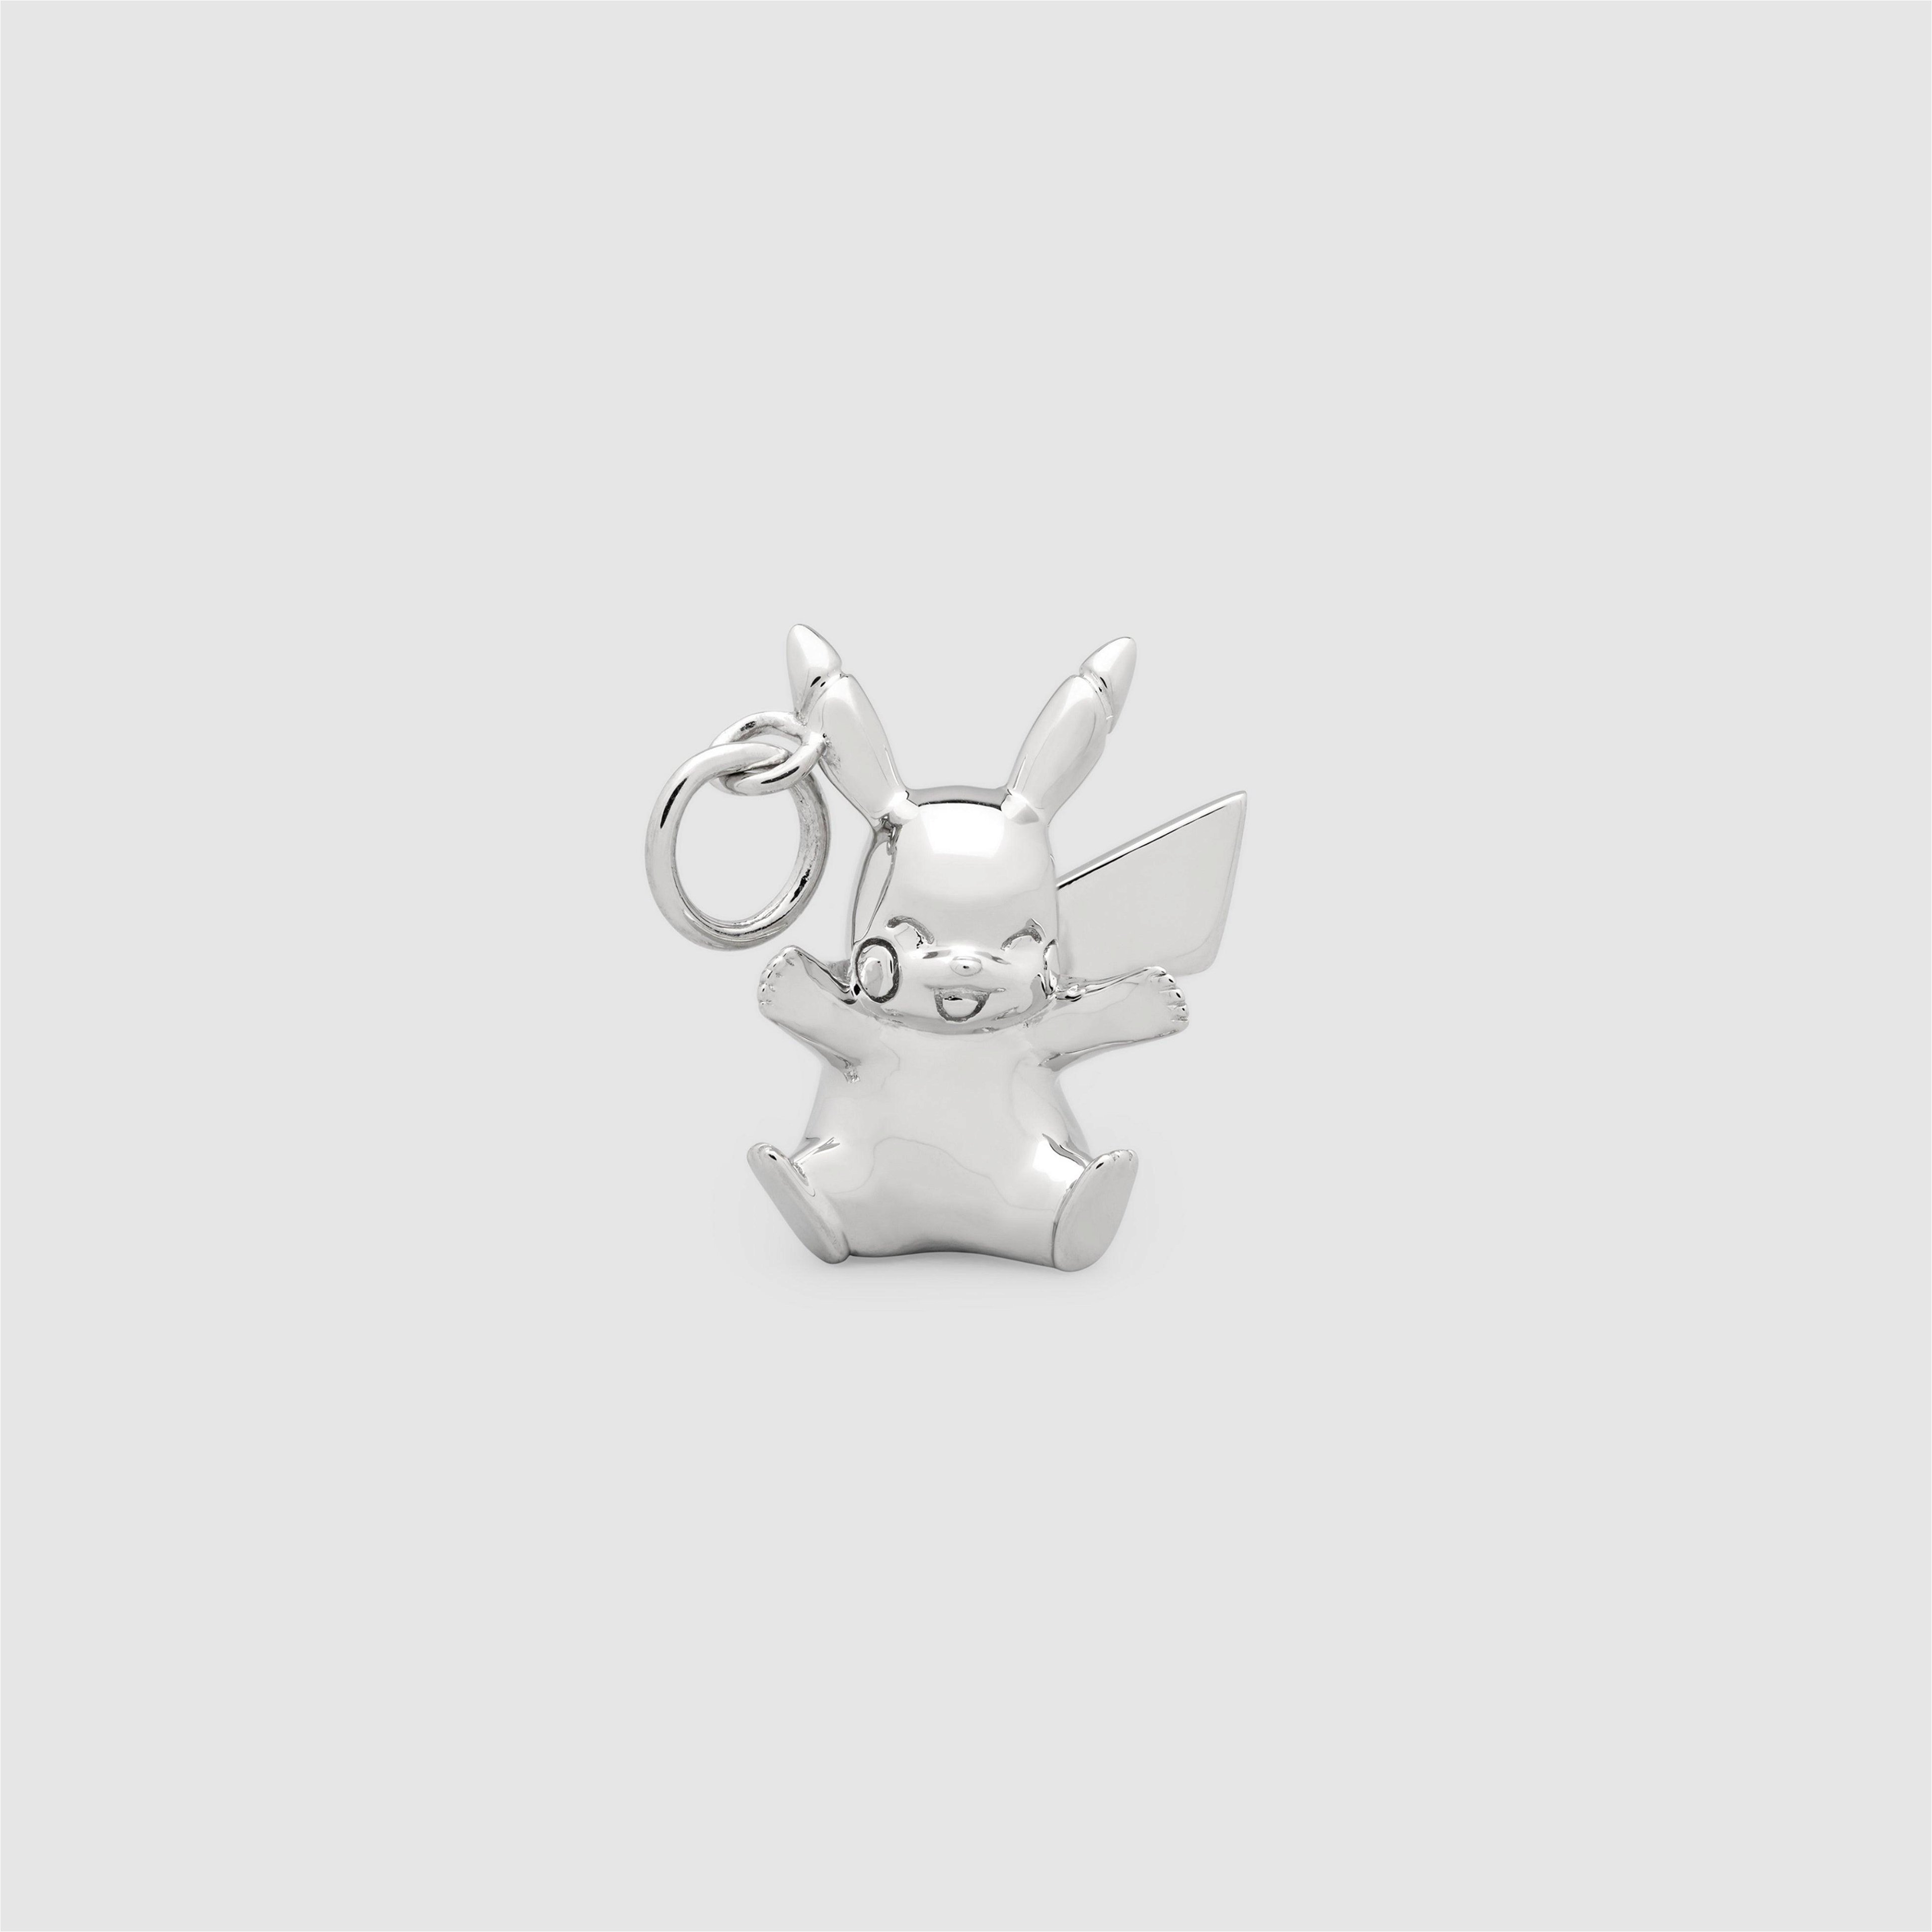 TOM WOOD - Pikachu Happy Charm - (Sterling Silver) by TOM WOOD